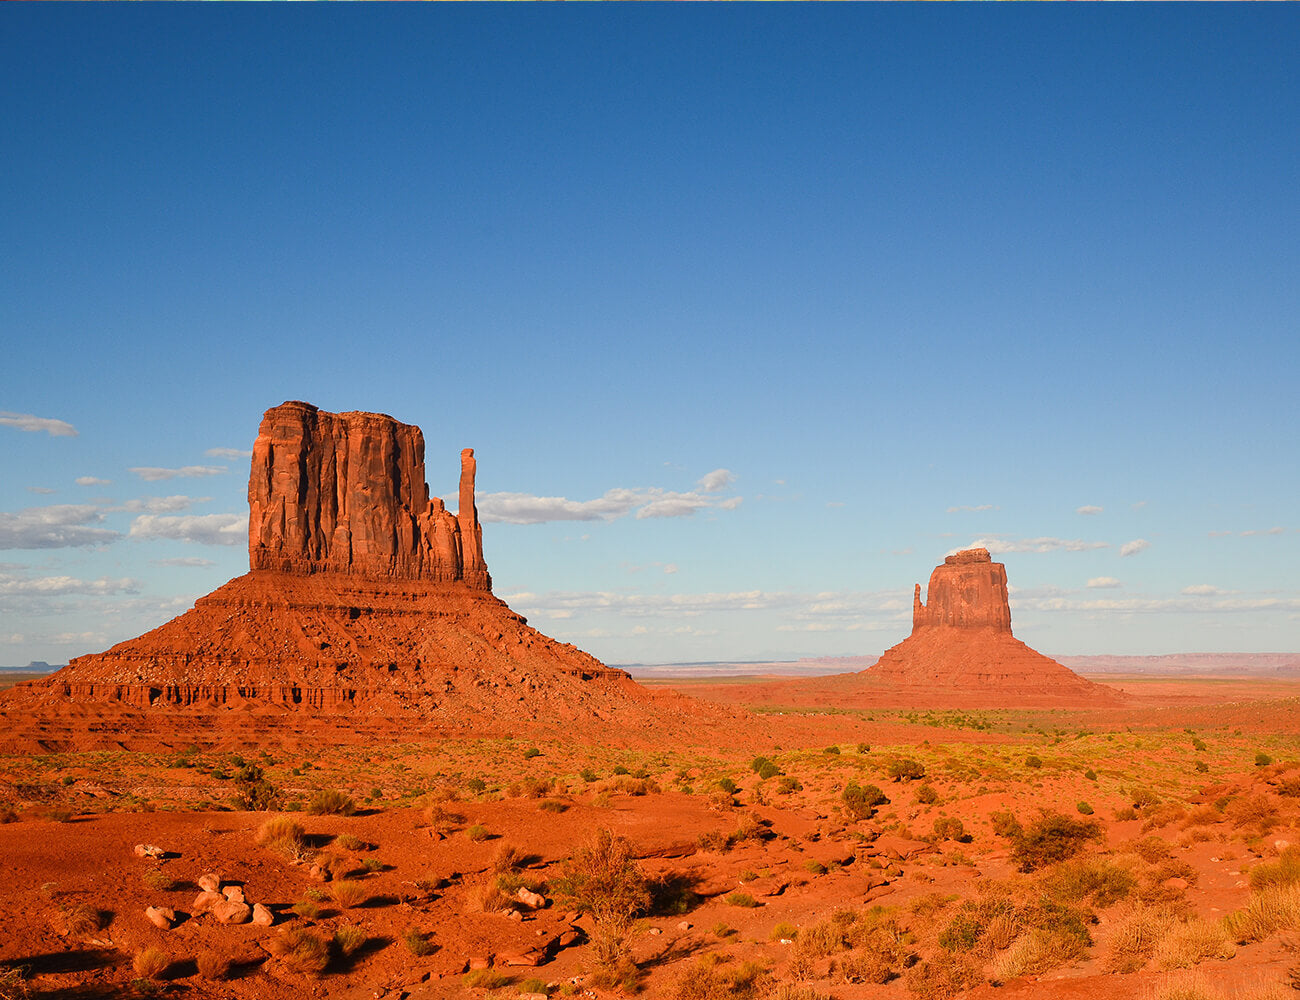 Desert Yellow Stone Hill Scenic Background For Photography IBD-24600